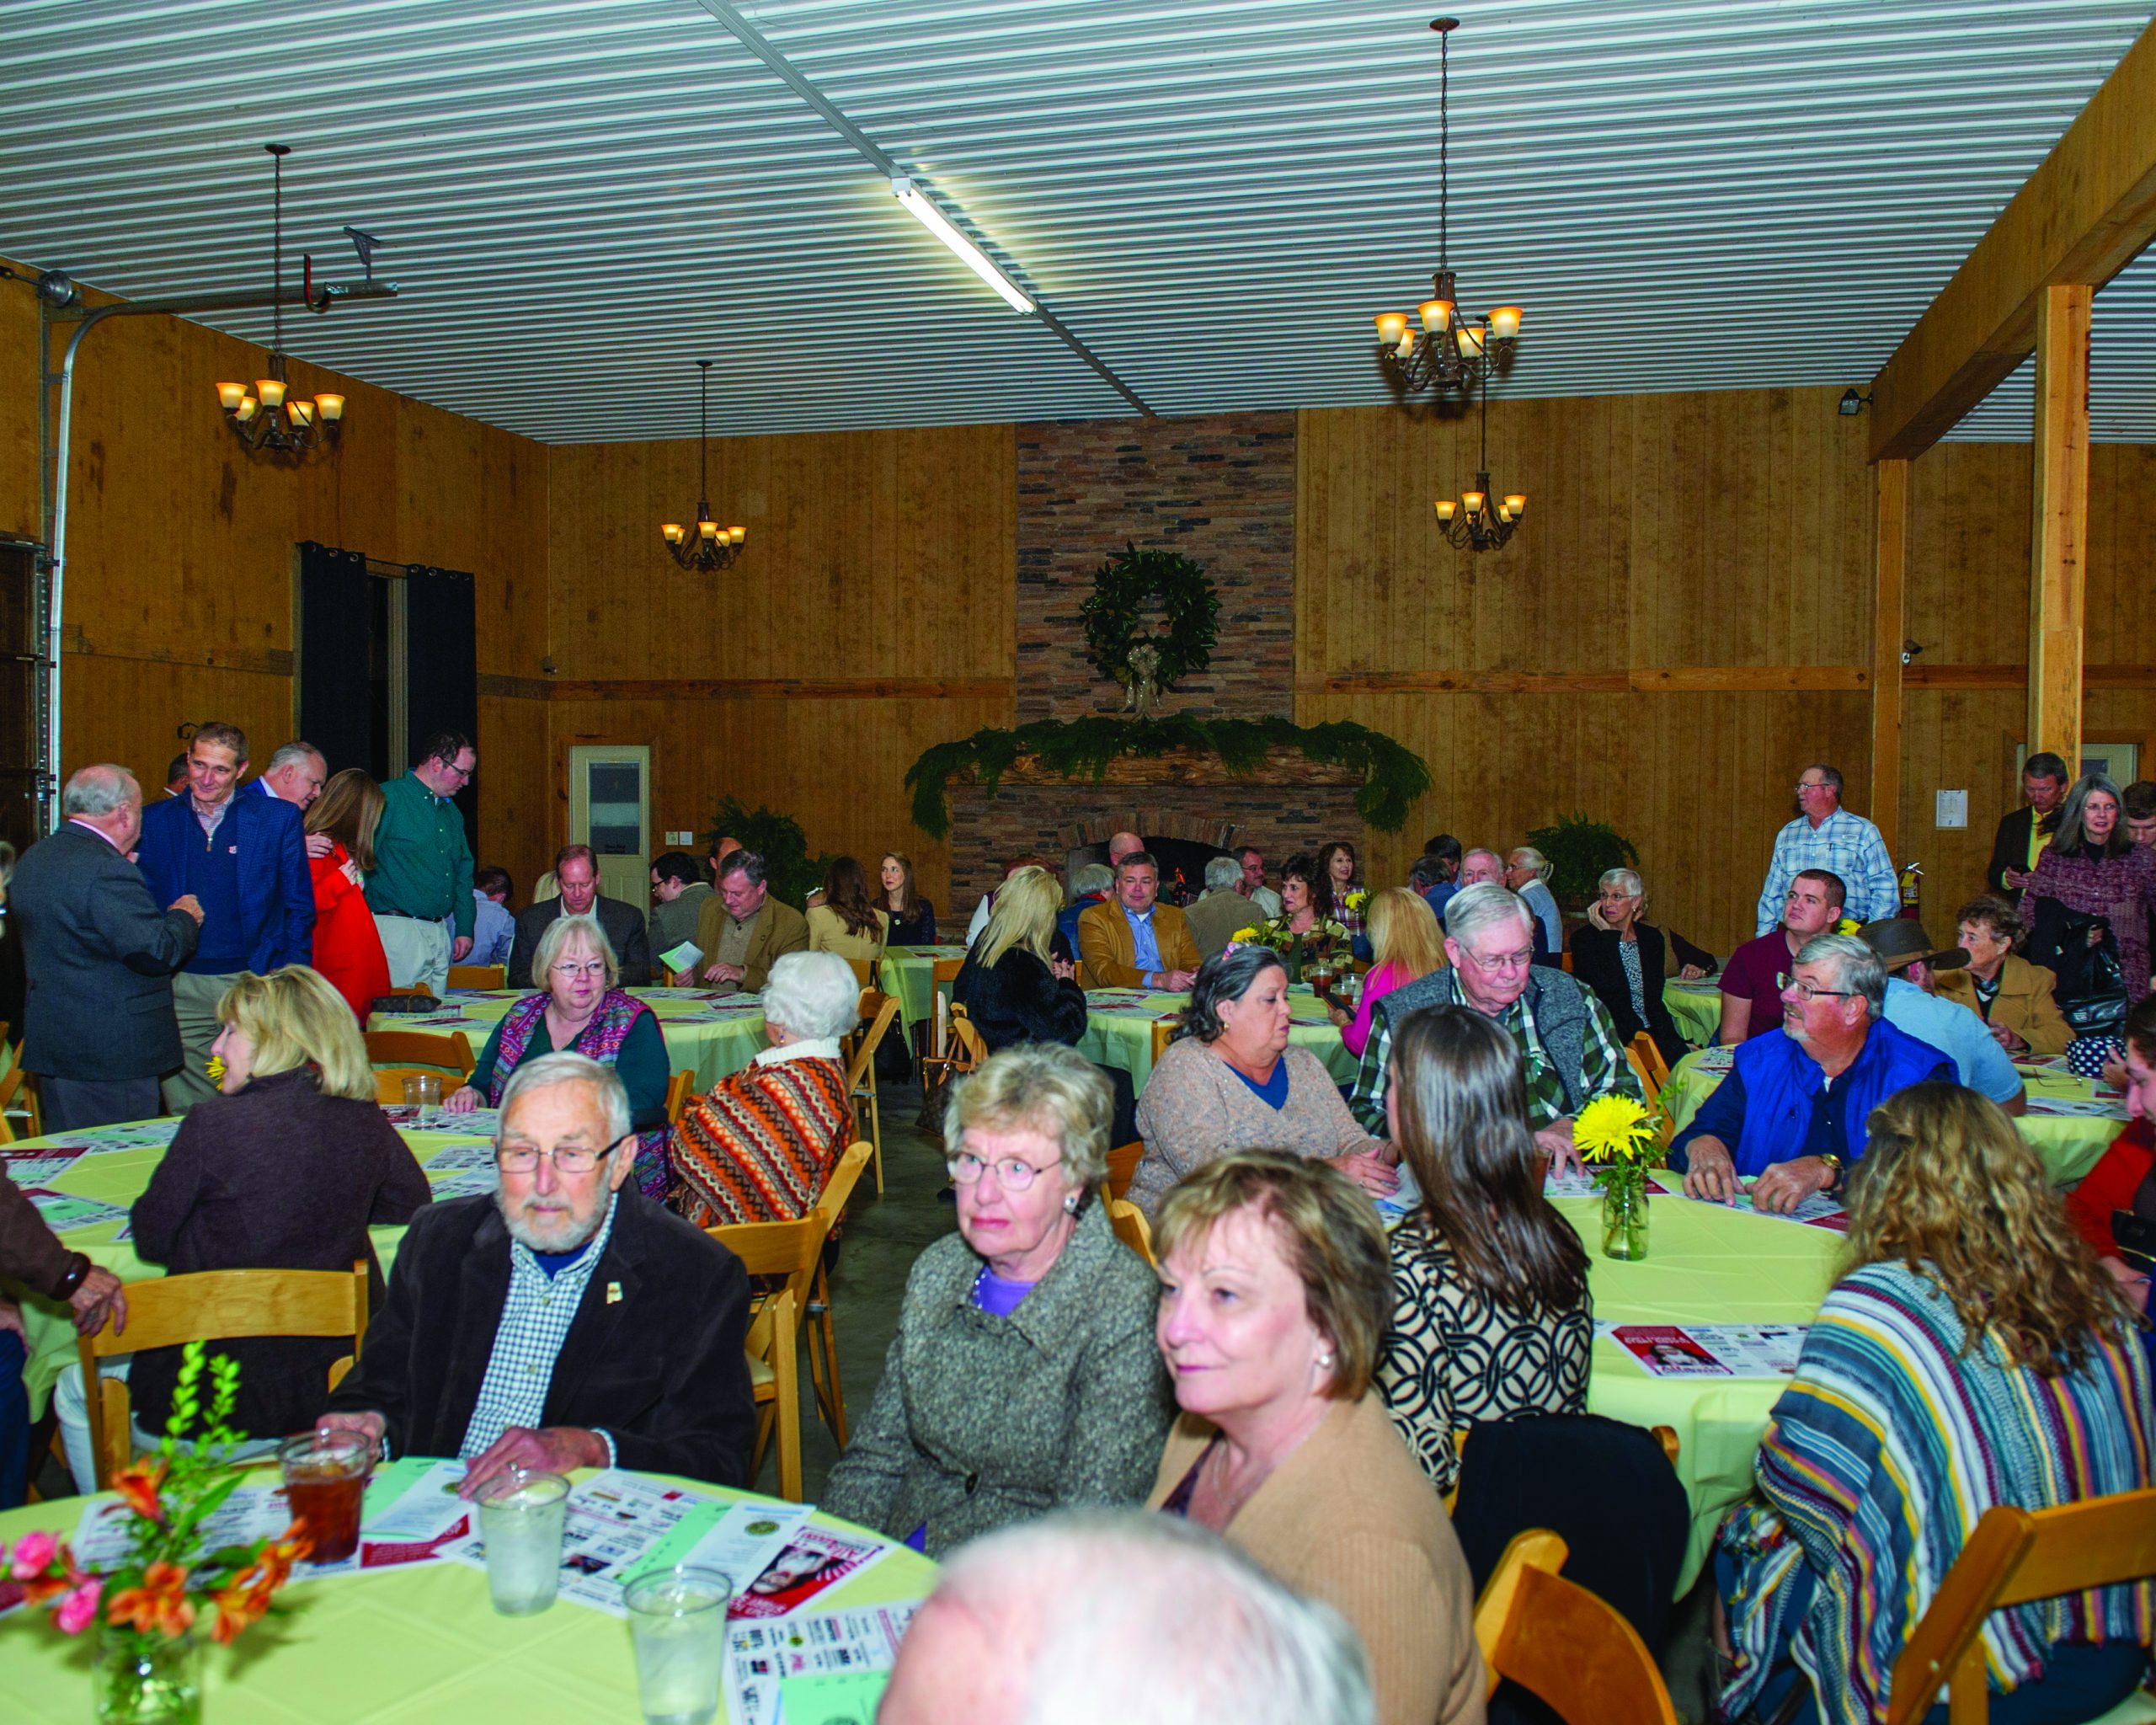 Annual ‘Farm City Banquet’ held Nov. 25 at Lazenby Farms in Beauregard